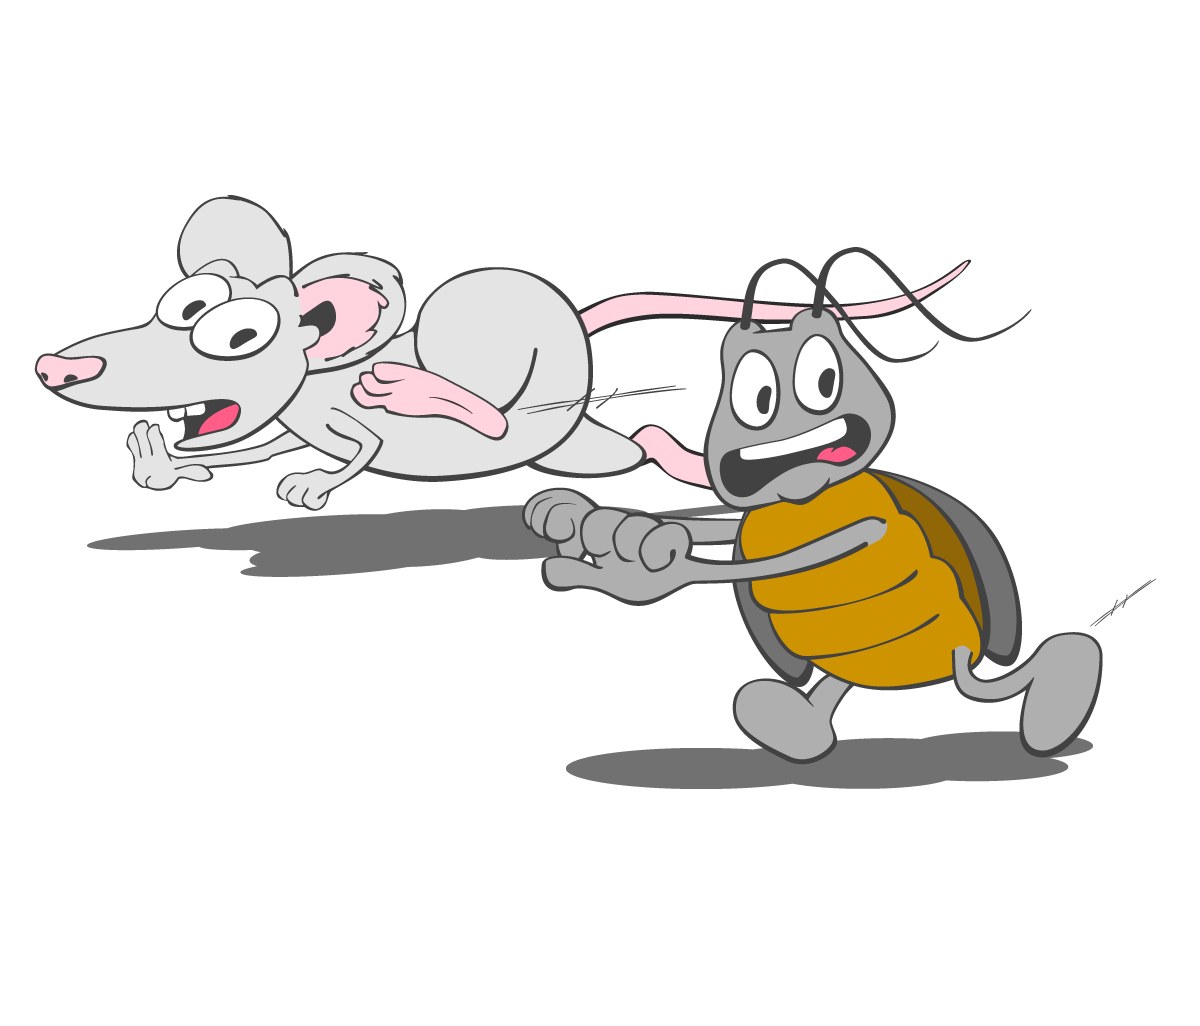 rat and roach running away